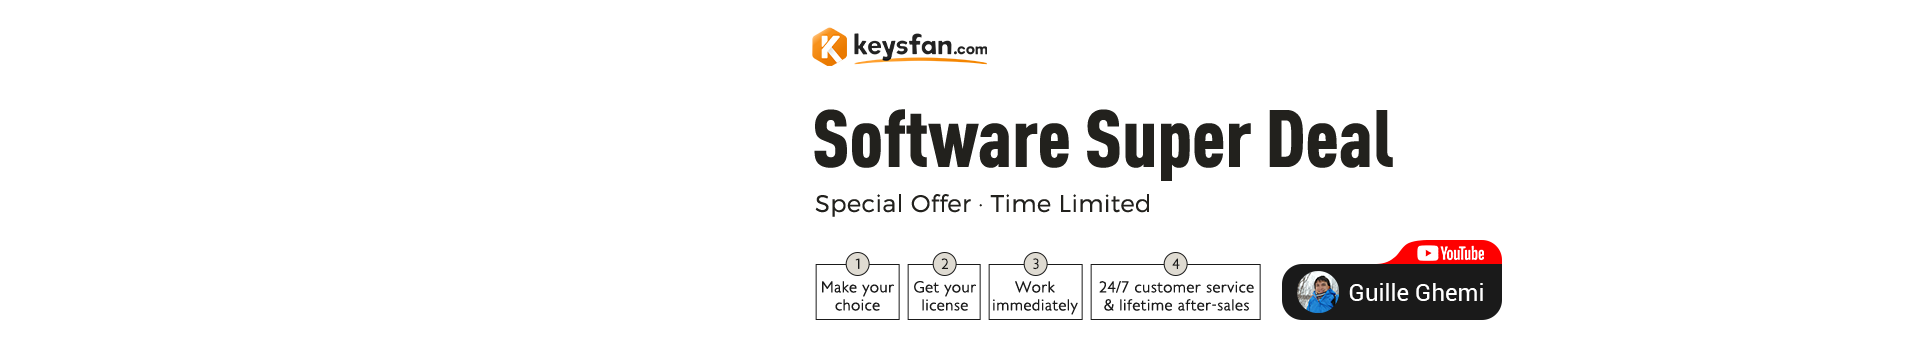 Software Super Deal